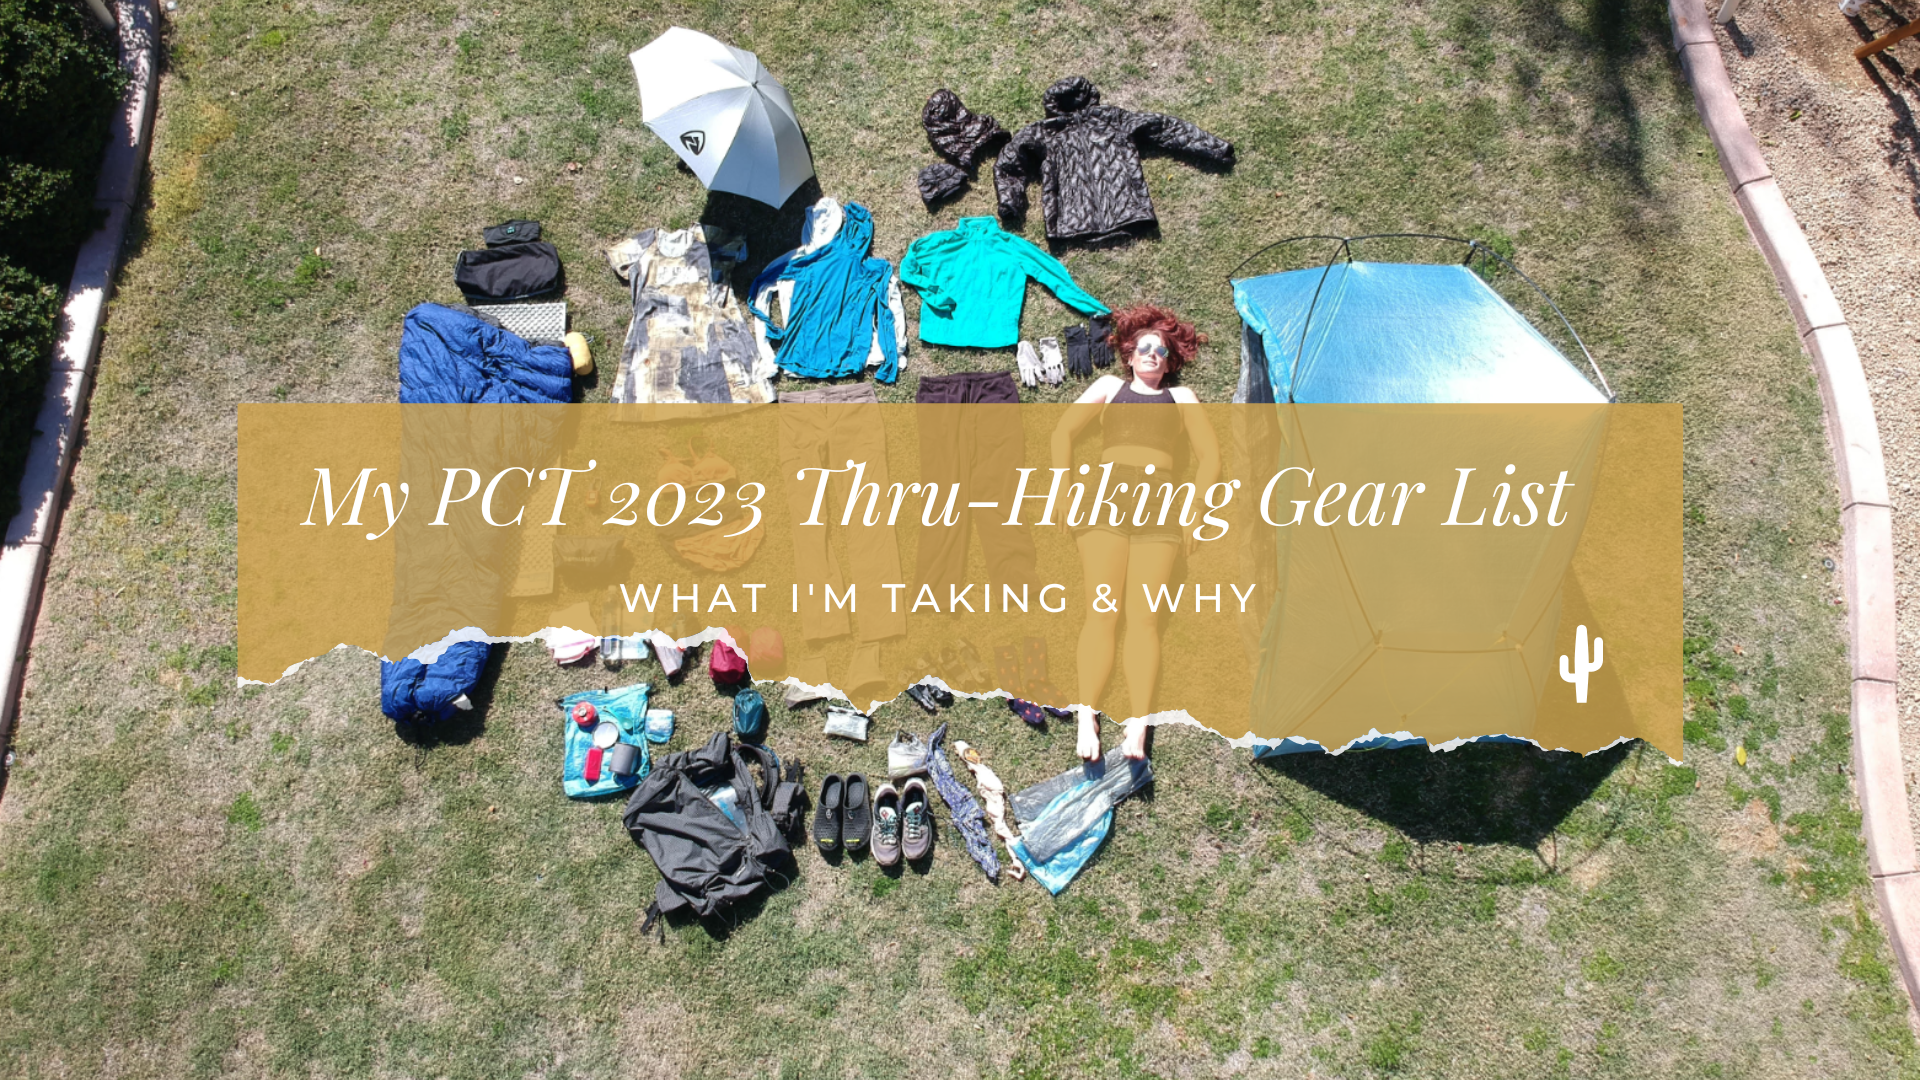 My PCT 2023 Thru-Hiking Gear List